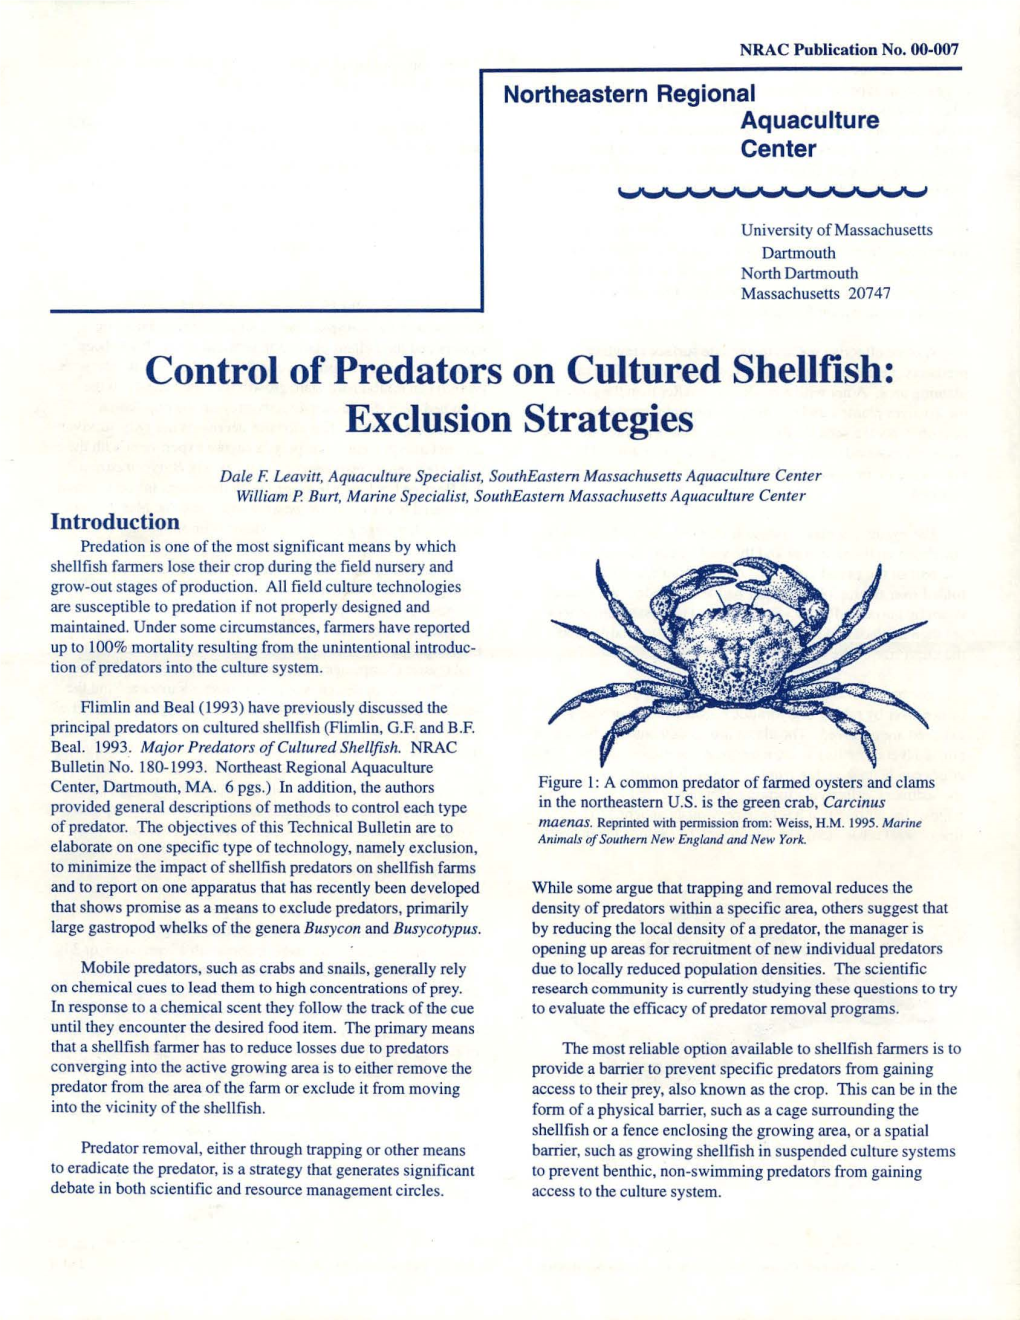 Control of Predators on Cultured Shellfish: Exclusion Strategies